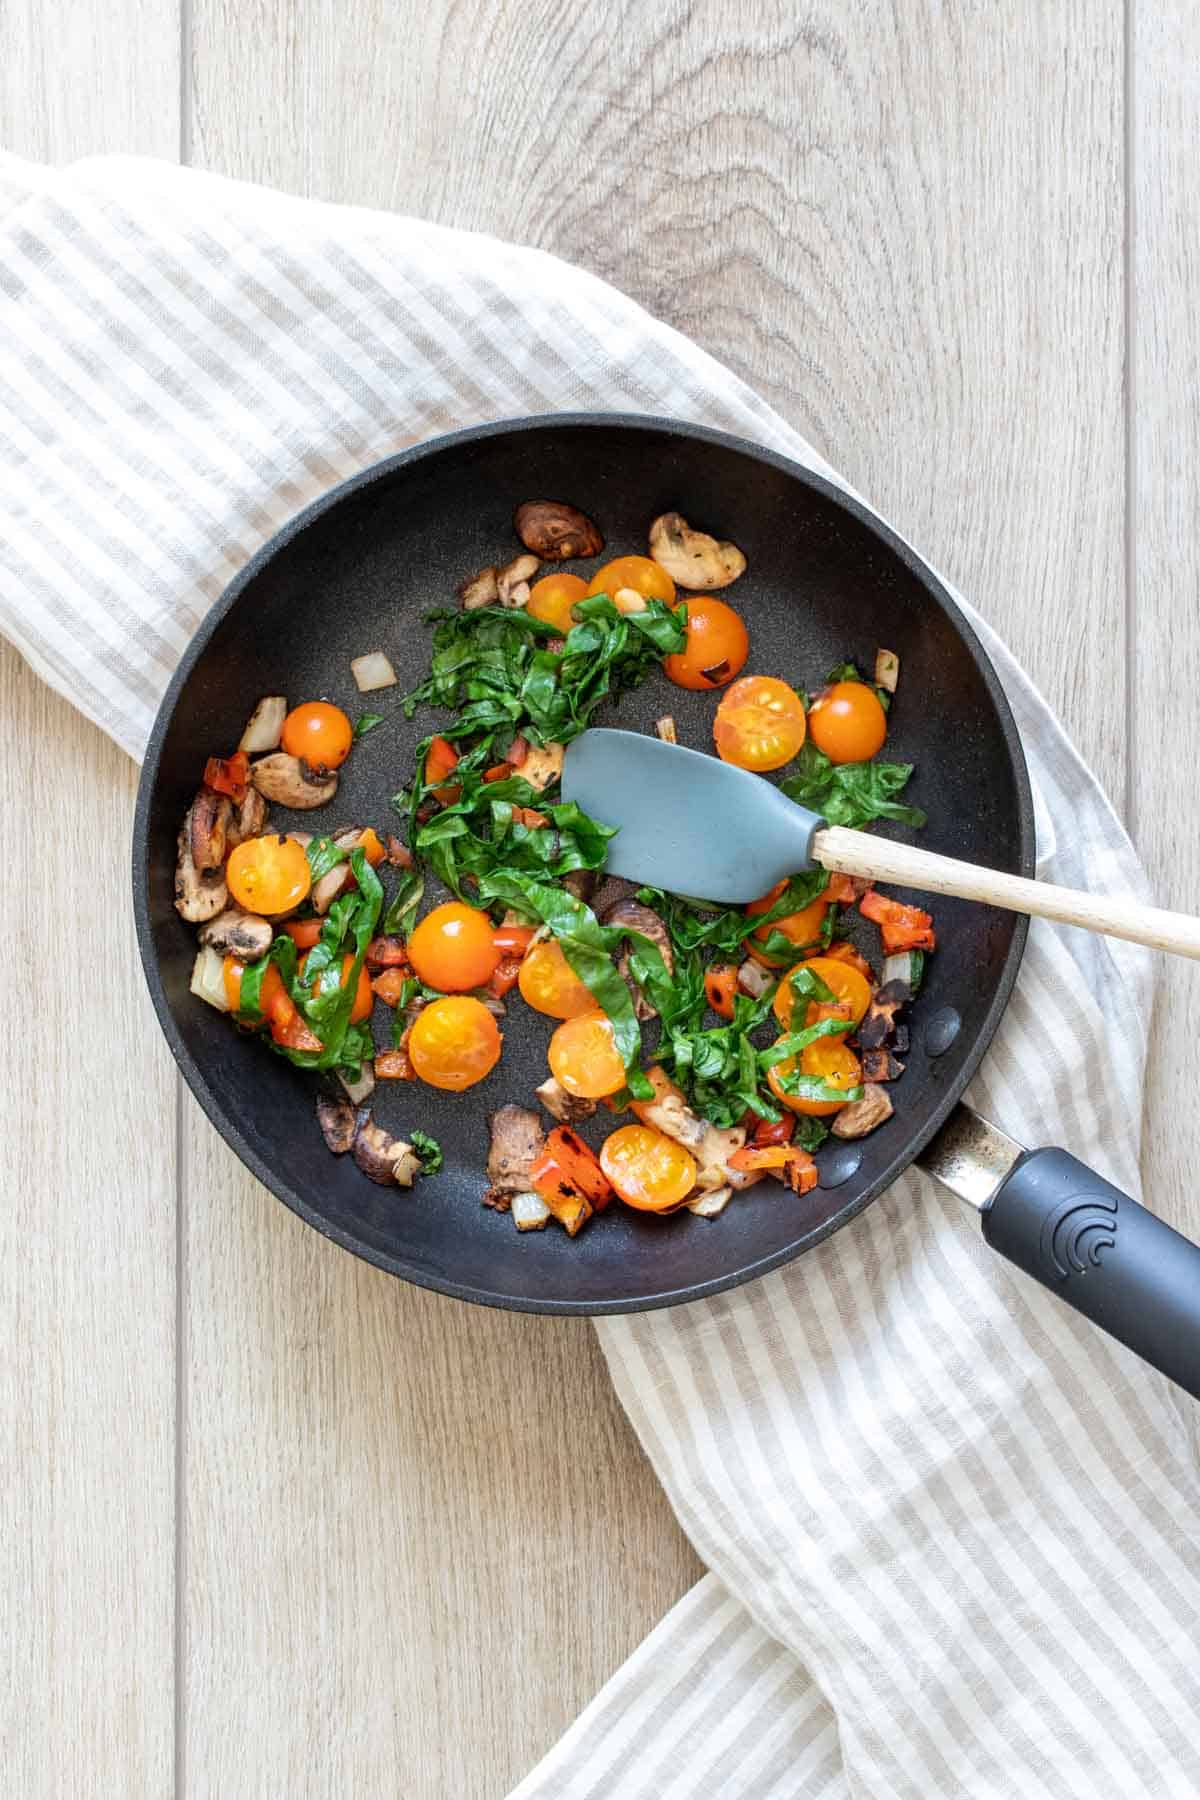 Grey spatula mixing sautéed veggies in a black pan.